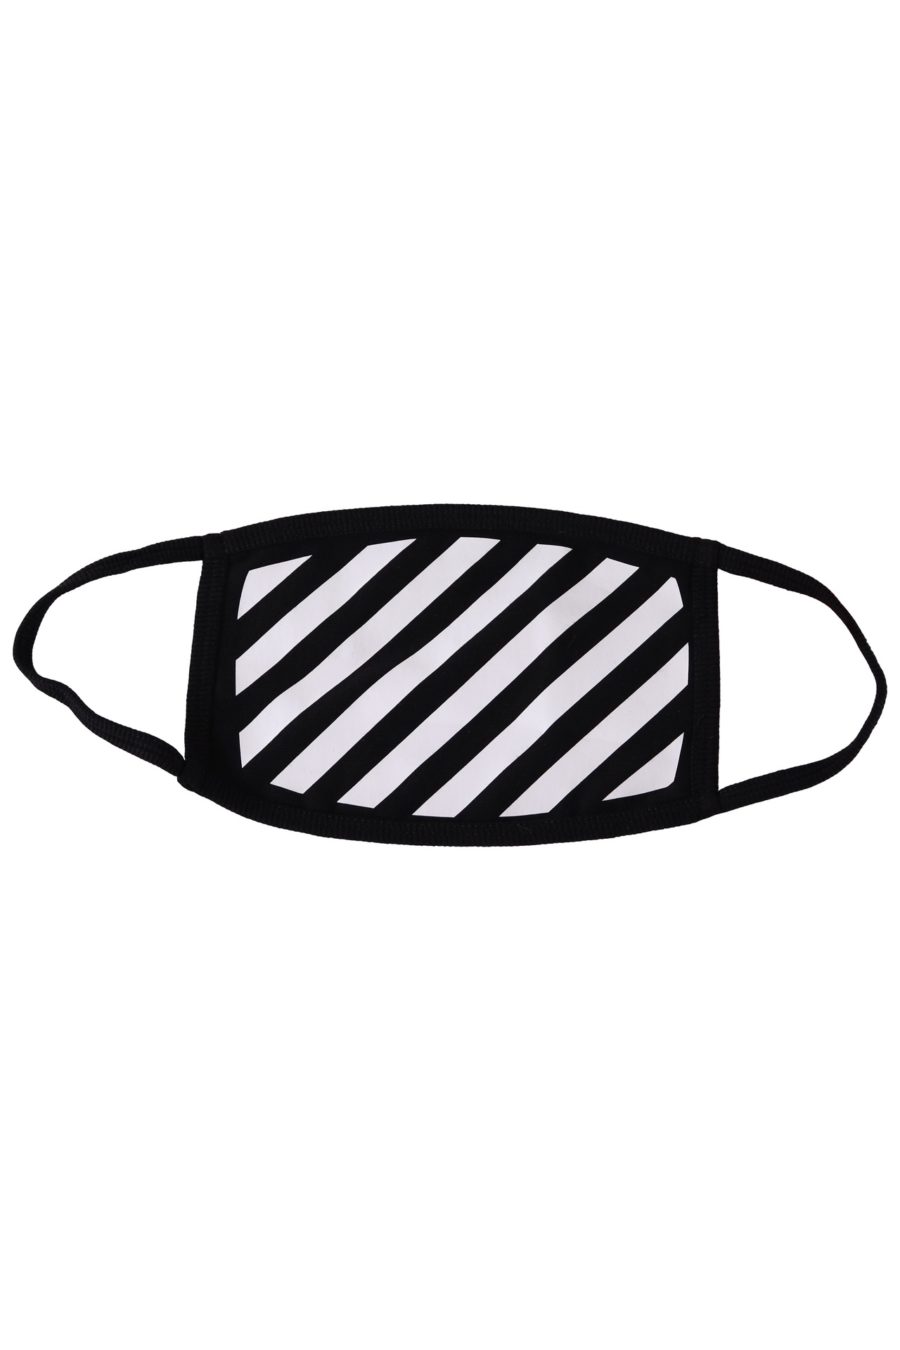 Mask Off-White black with white stripes - 488b5471a69a597fa0eae1c96bb6bd148ef83728